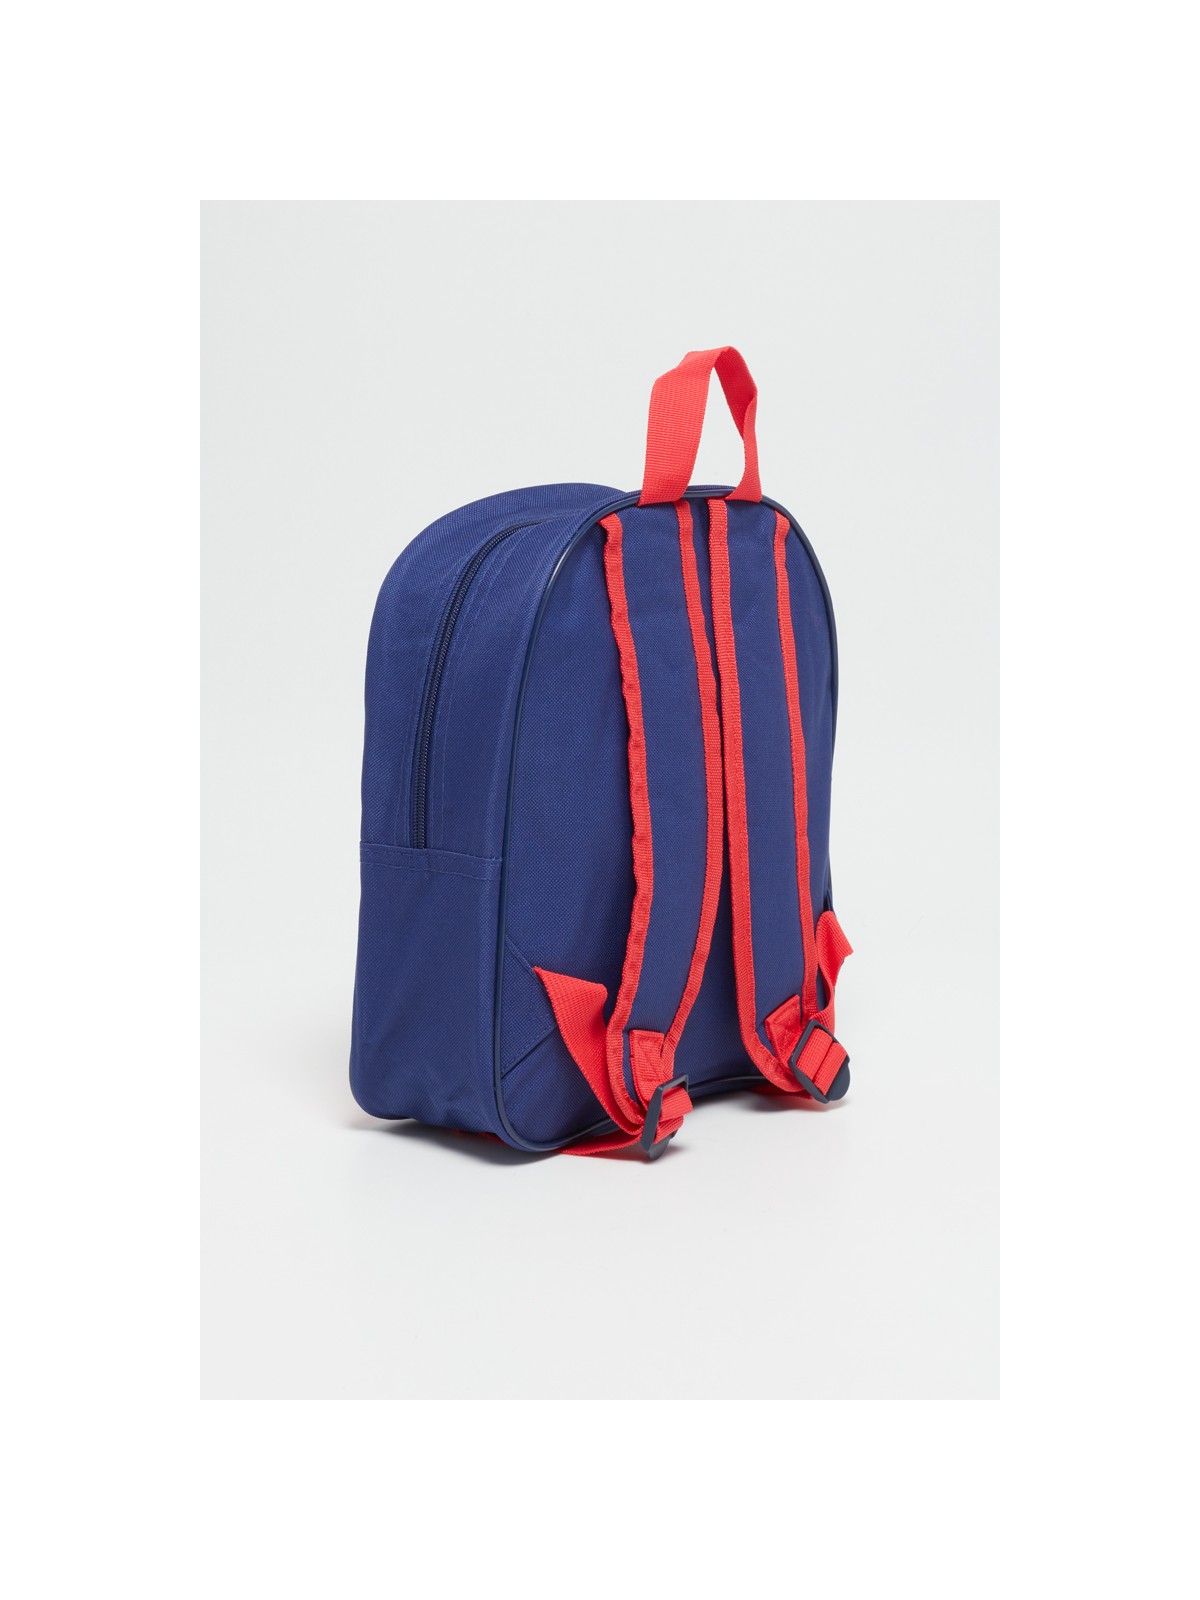 Nasa Backpack